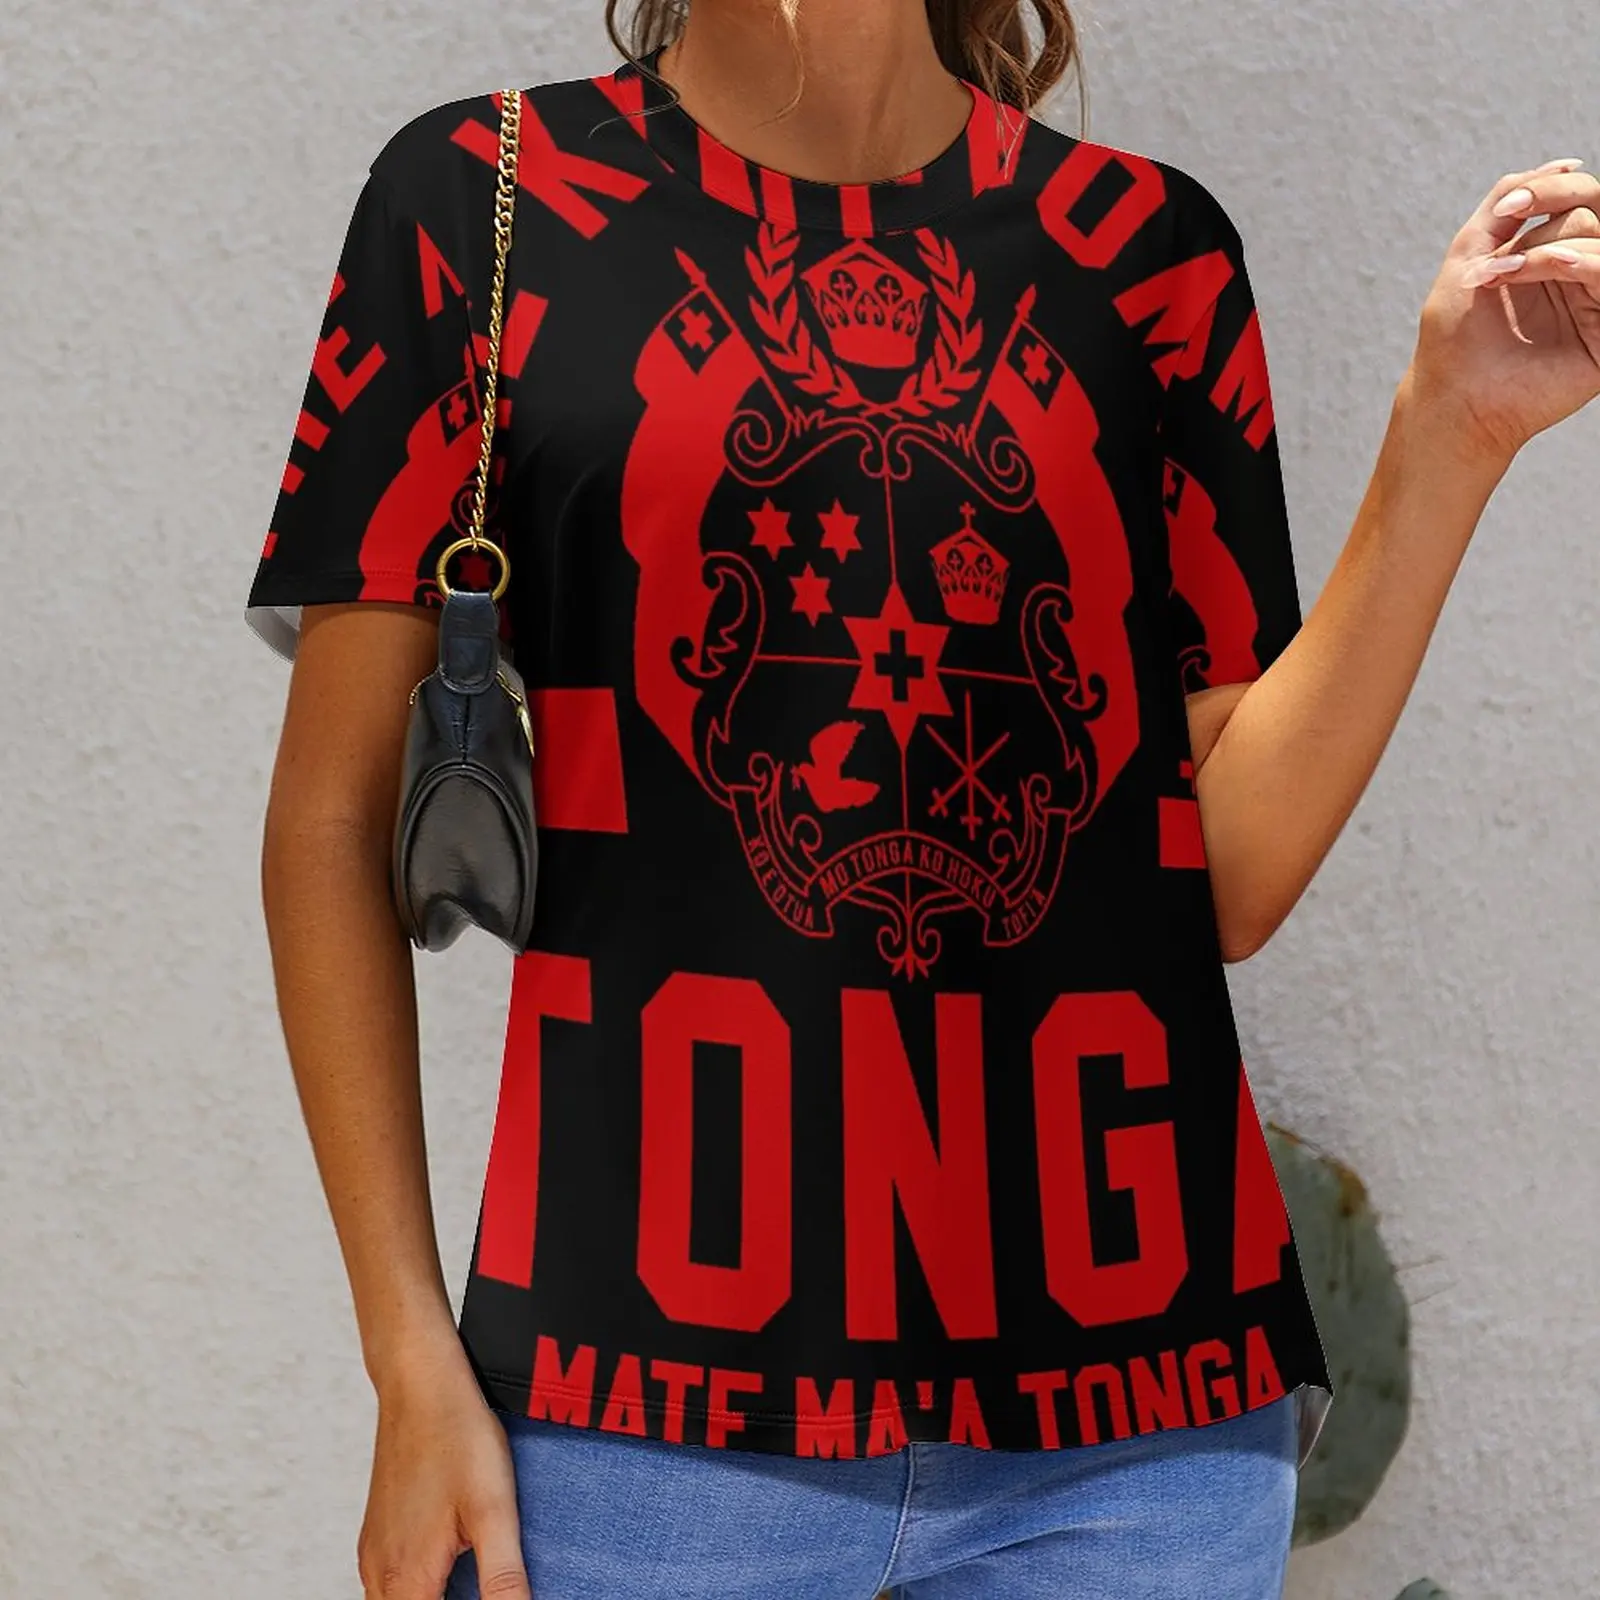 

Unique The Kingdom of Tonga VolcanoMate Ma`a Tonga T-shirts High Grade Home USA Size